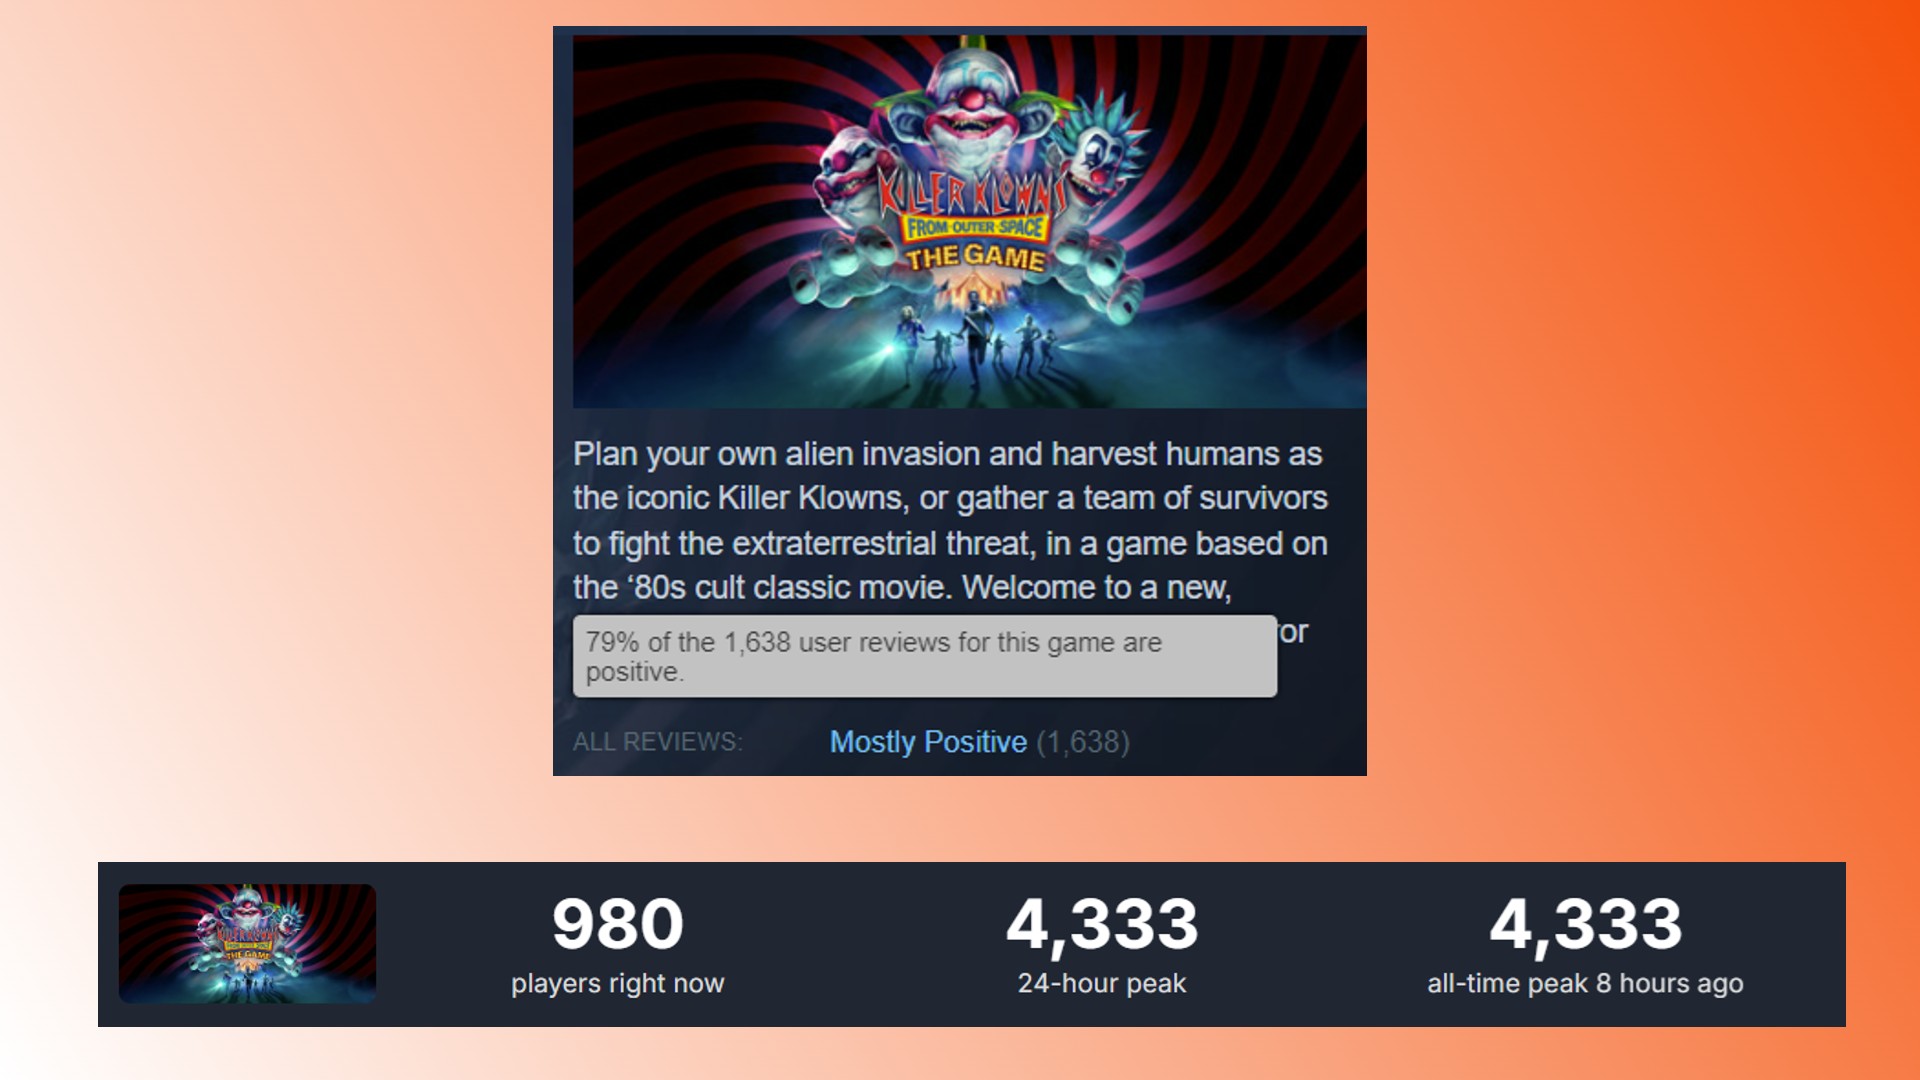 Killer Klowns Steam reviews: Steam reviews for new horror game and DBD rival Killer Klown